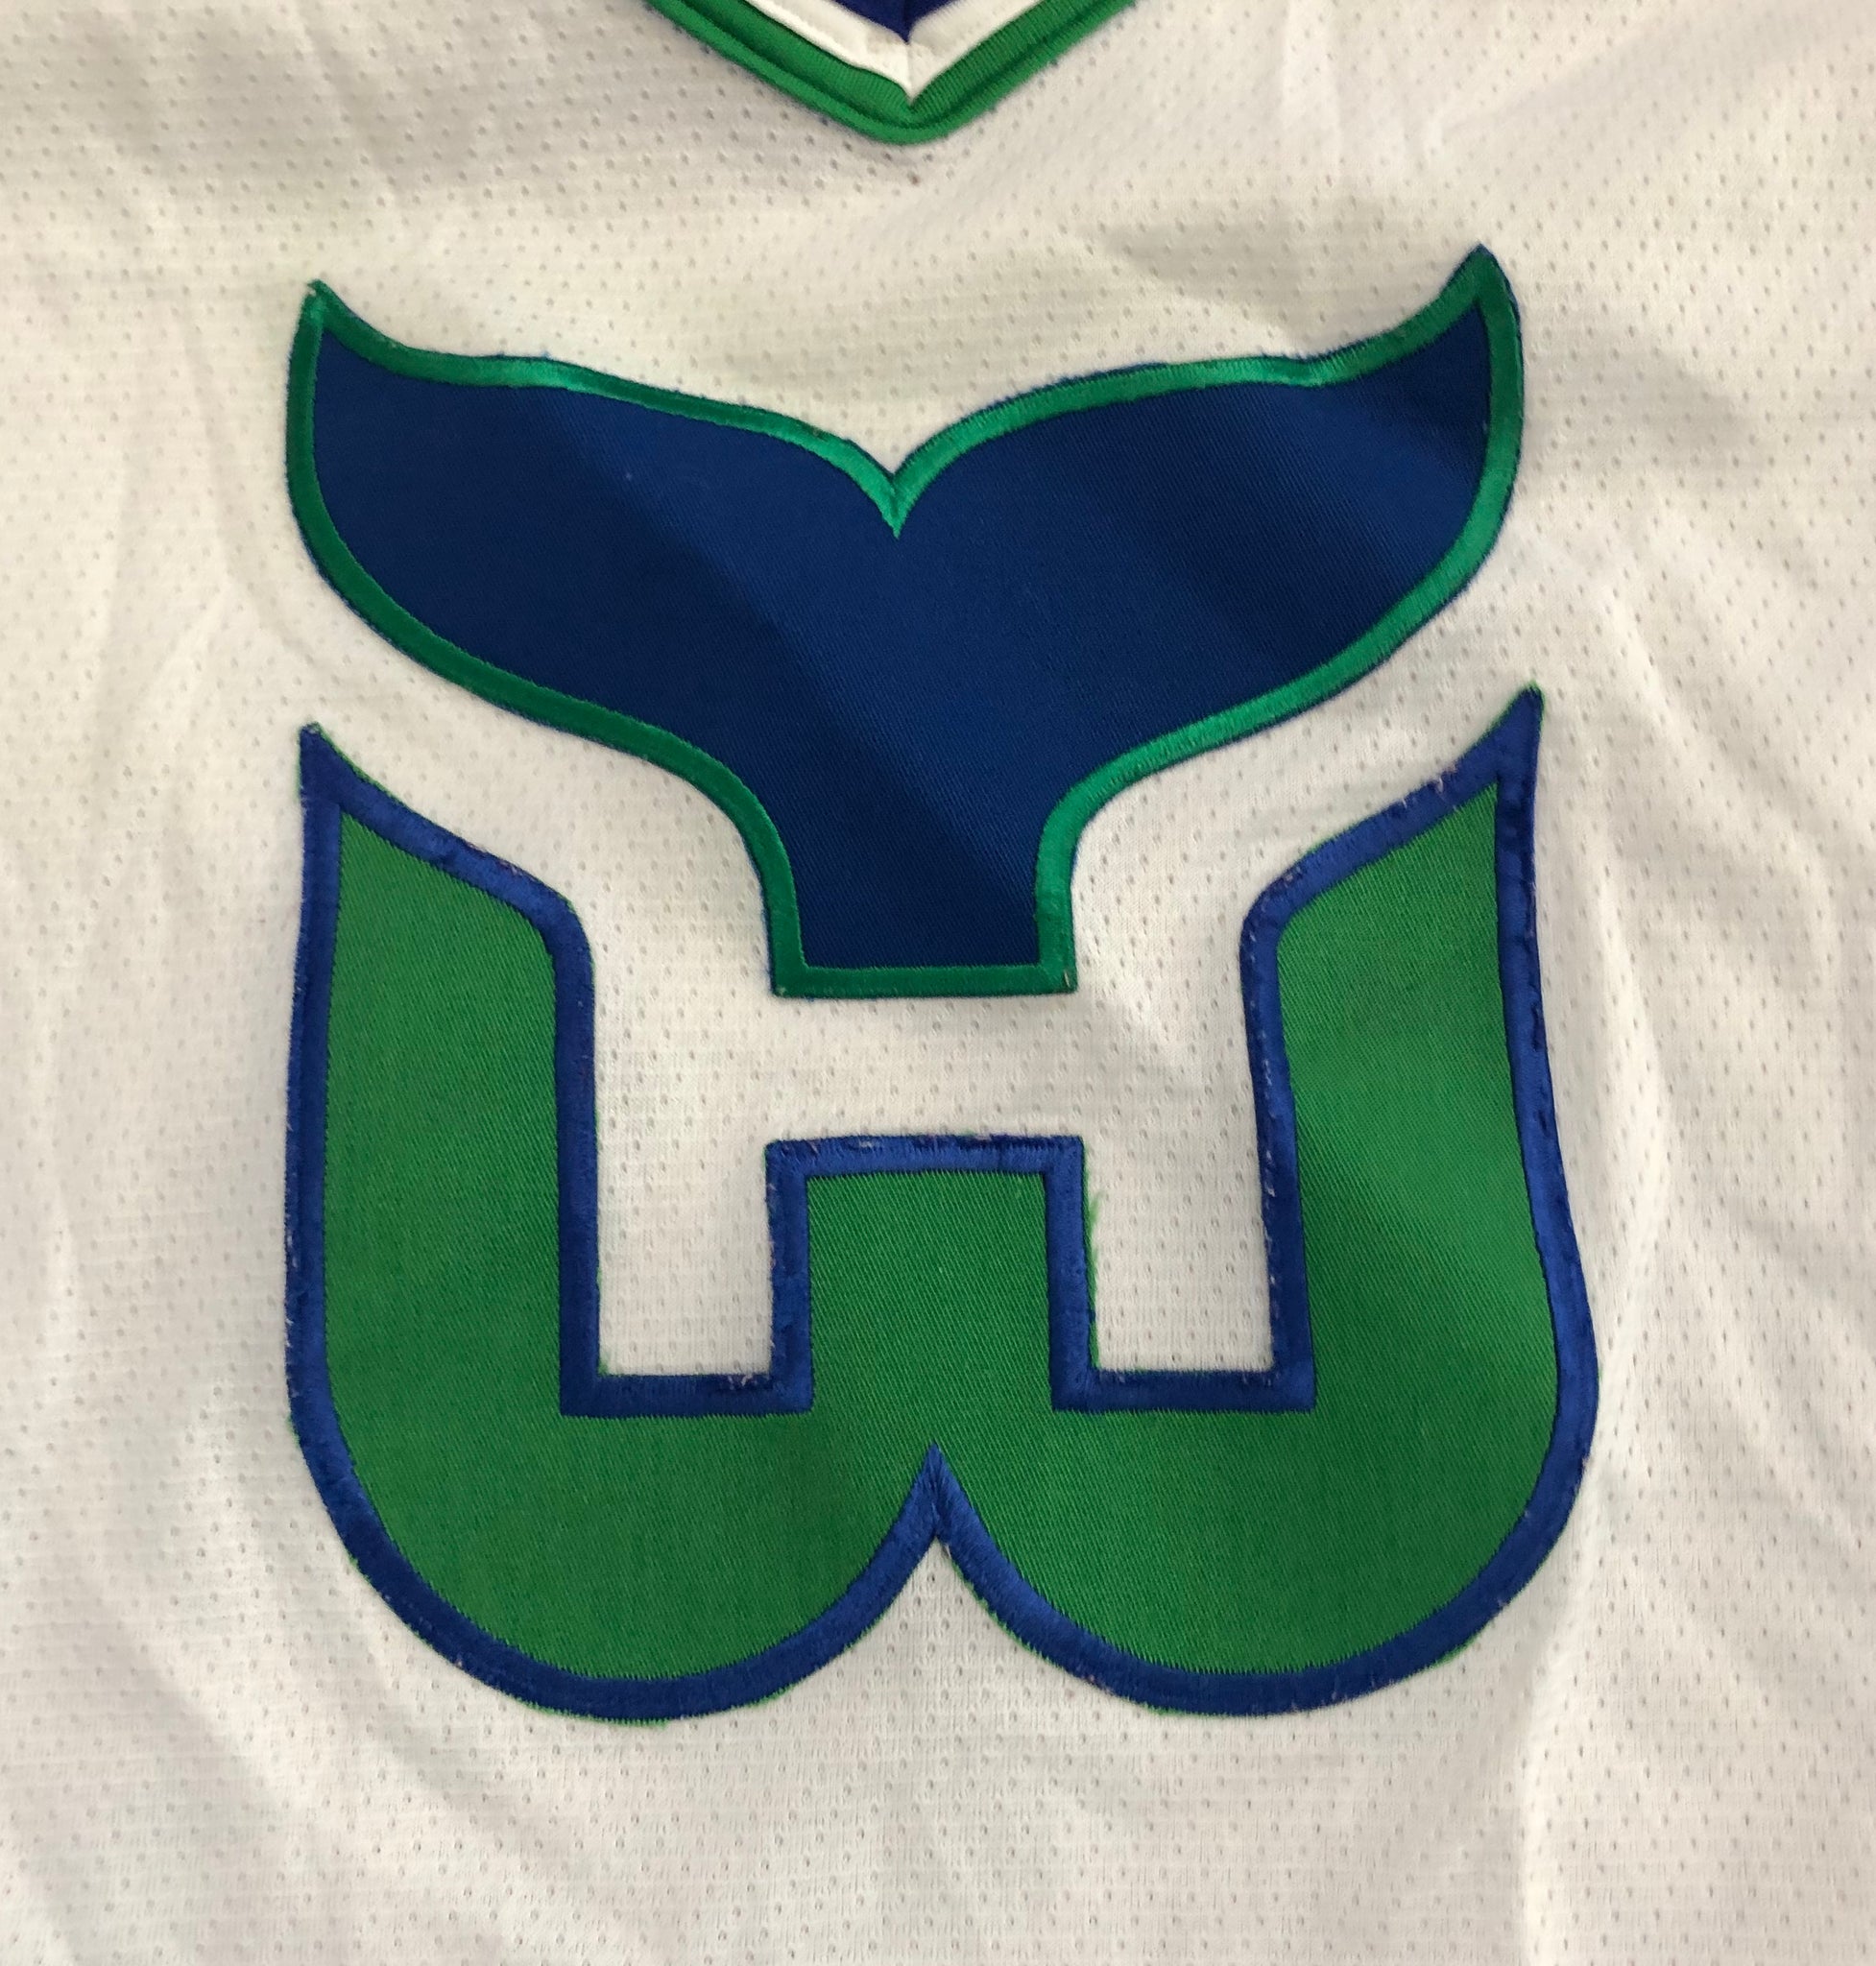 Hartford Whalers mens large game jersey